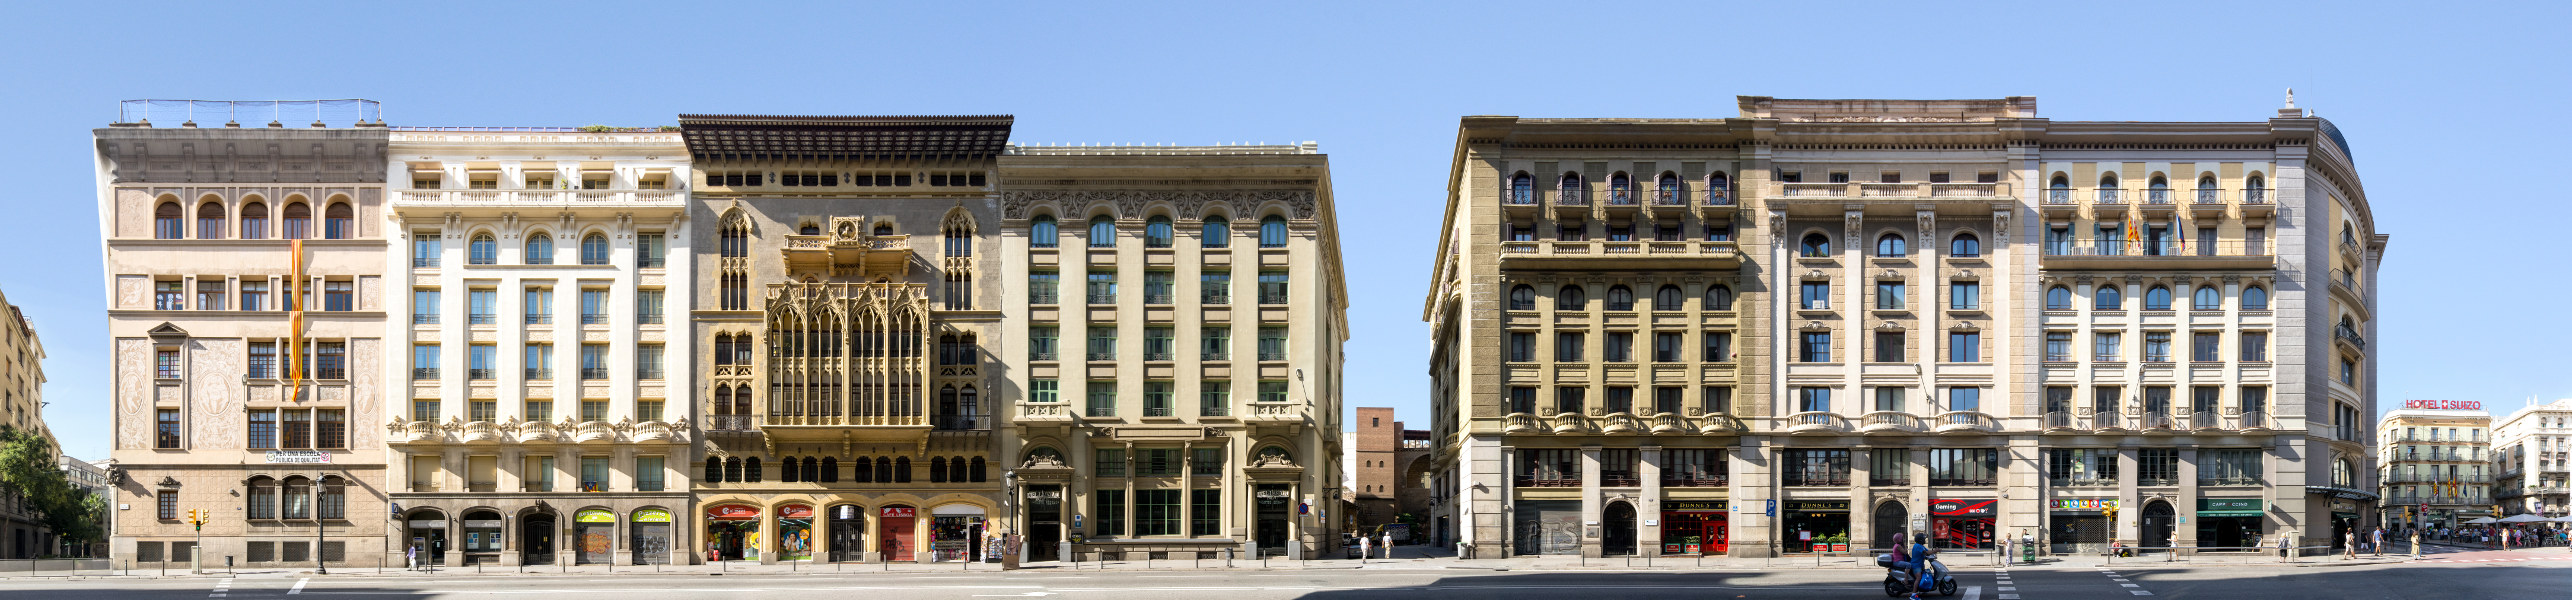 barcelona via laietana architecture catalunya